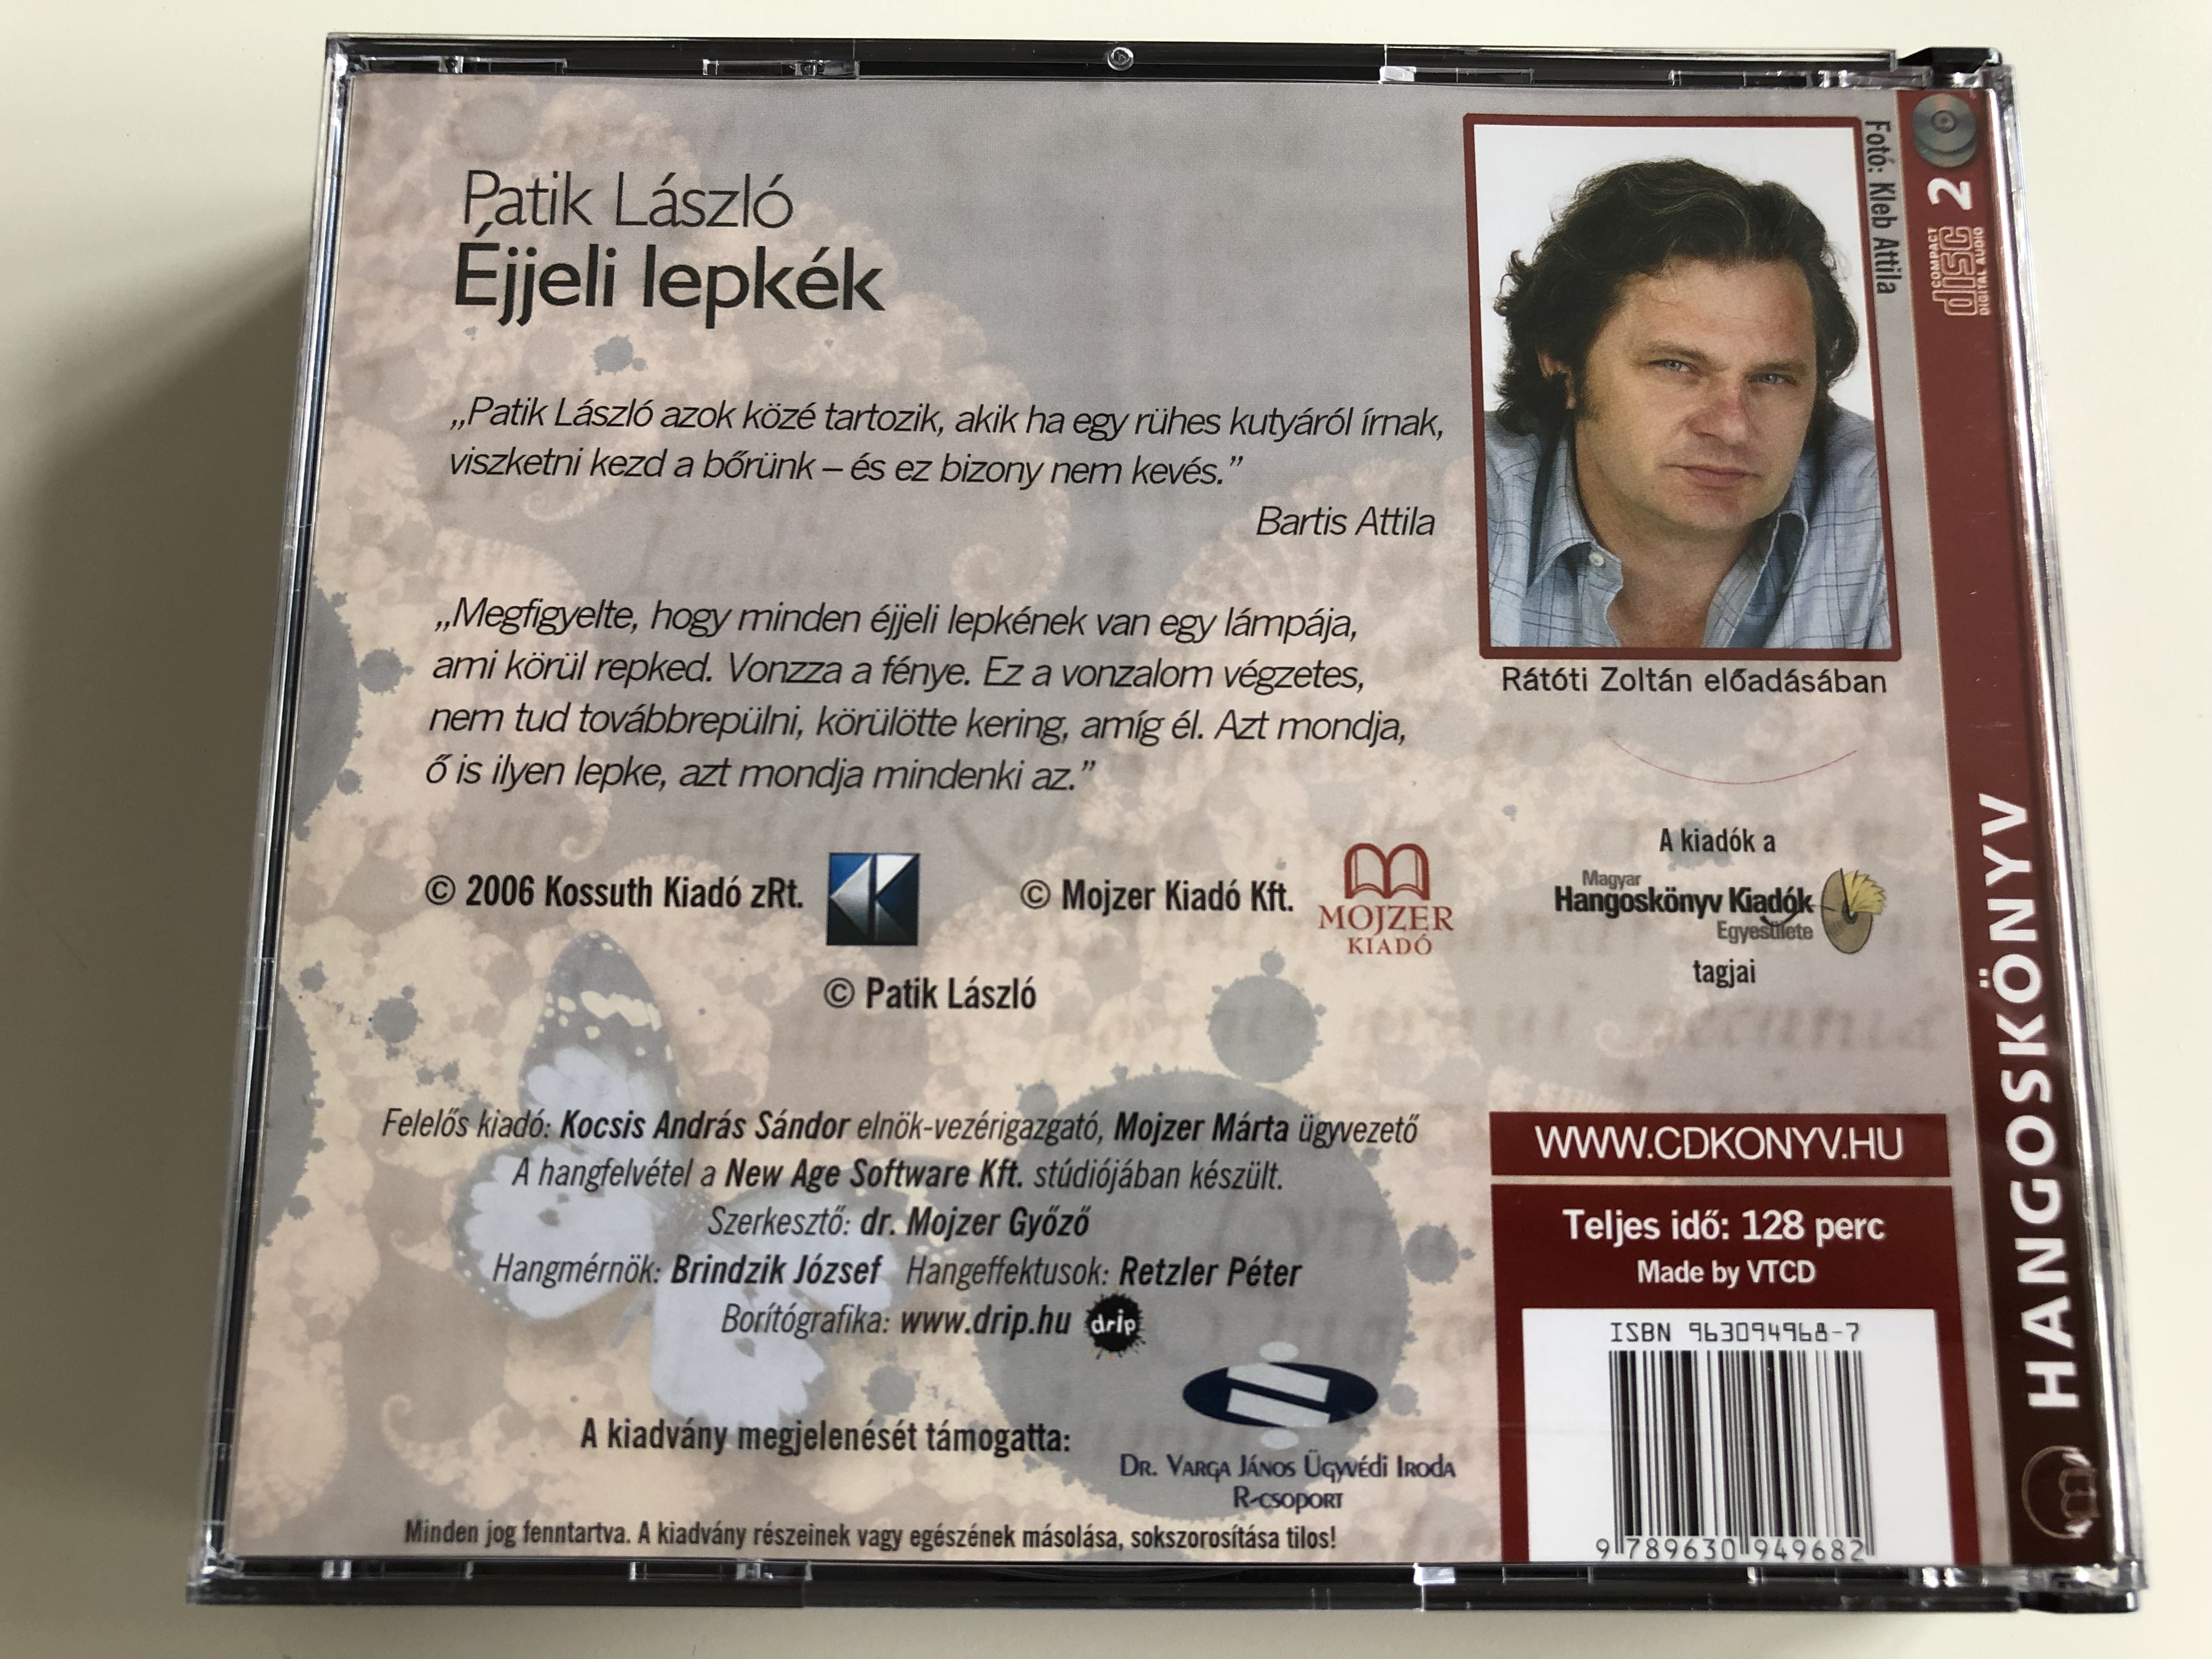 patik-l-szl-jjeli-lepk-k-read-by-r-t-ti-zolt-n-2cd-audio-book-2006-kossuth-mojzer-kiad-4-.jpg